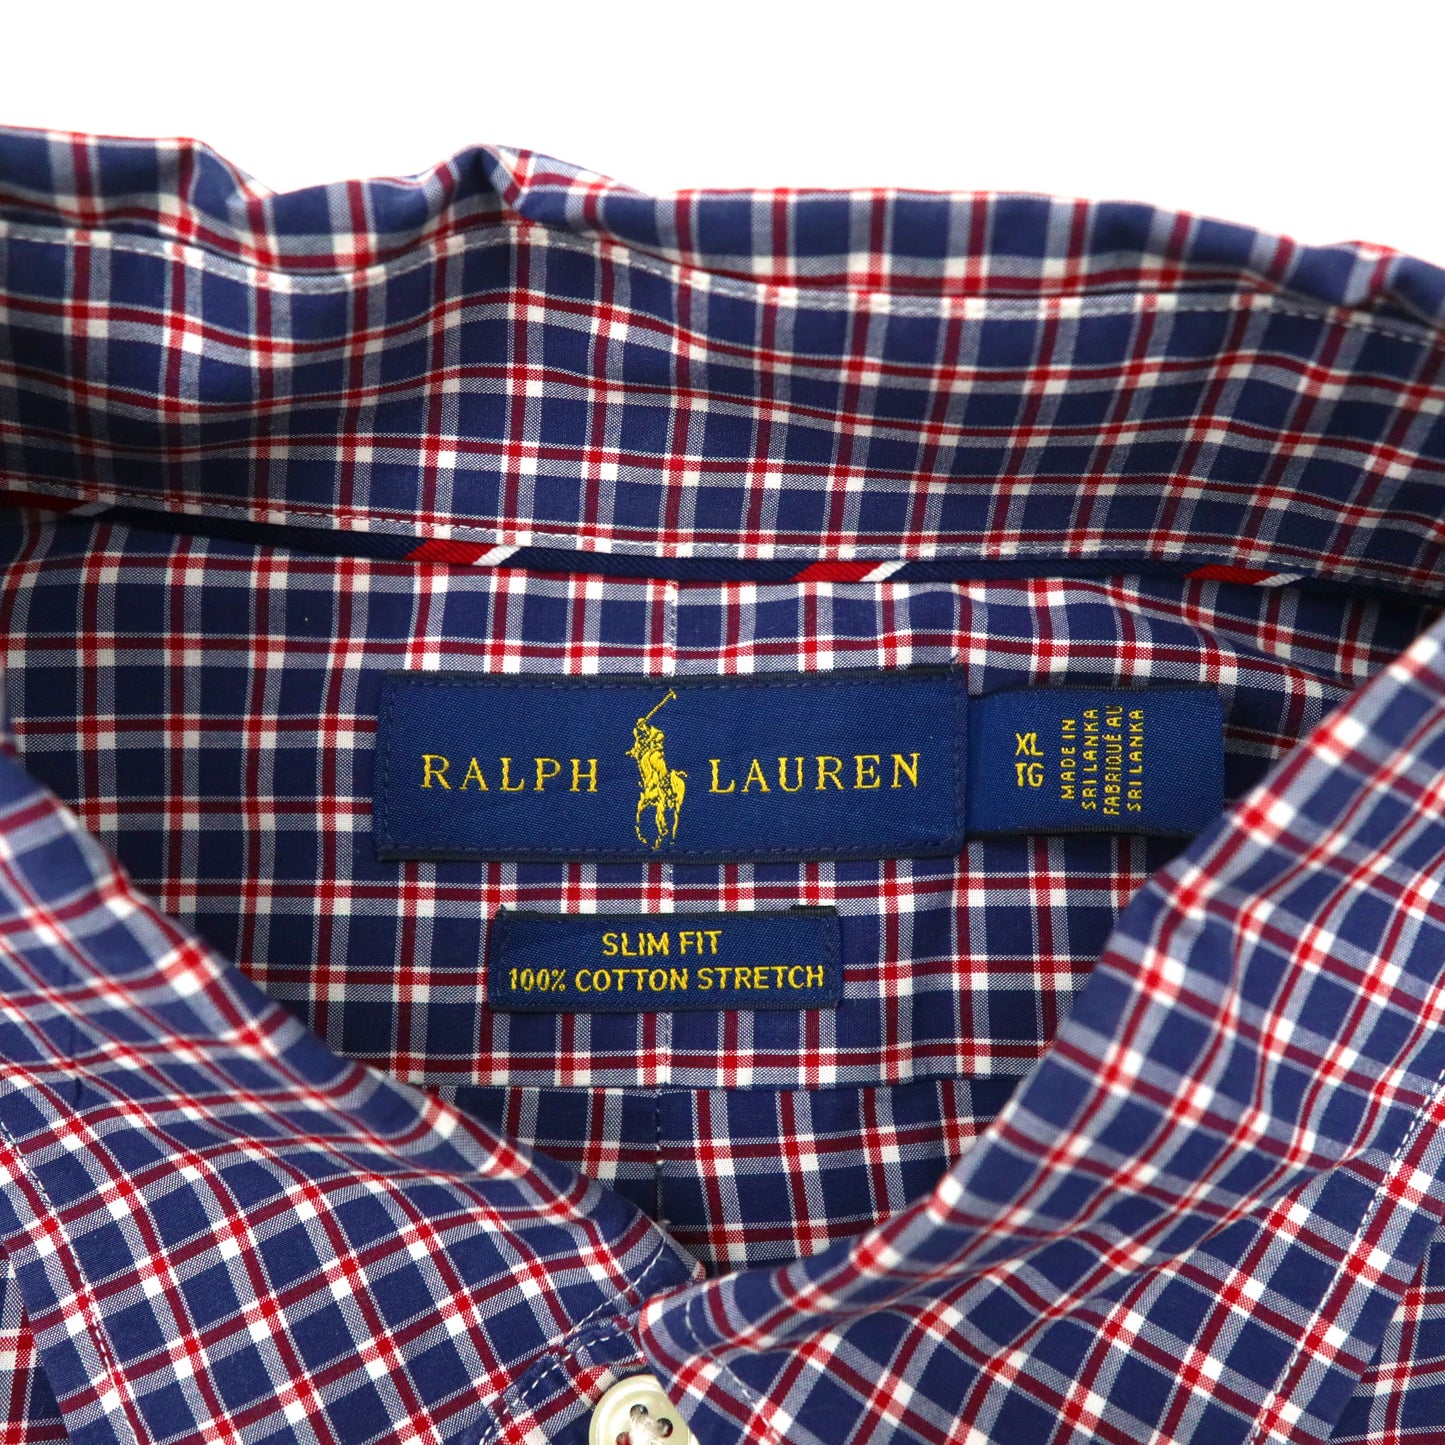 RALPH LAUREN ボタンダウンシャツ XL ネイビー チェック コットン ストレッチ SLIM FIT スモールポニー刺繍